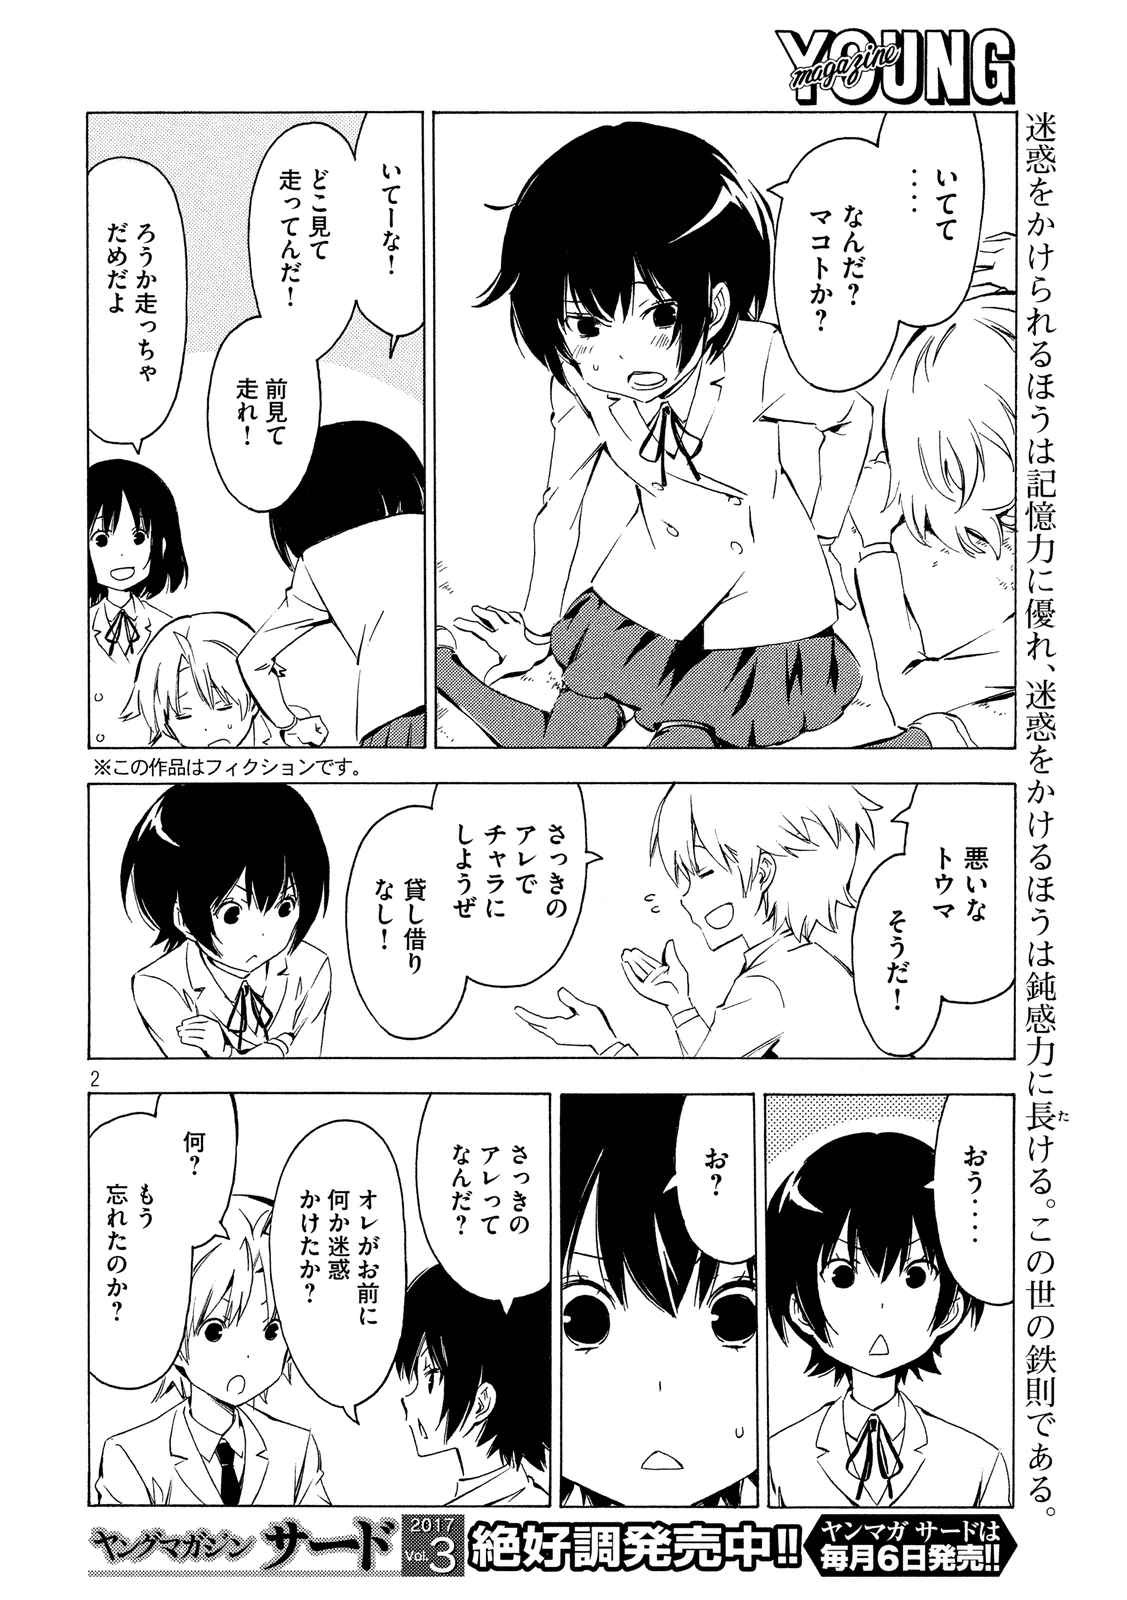 Minami-ke - Chapter 310 - Page 2